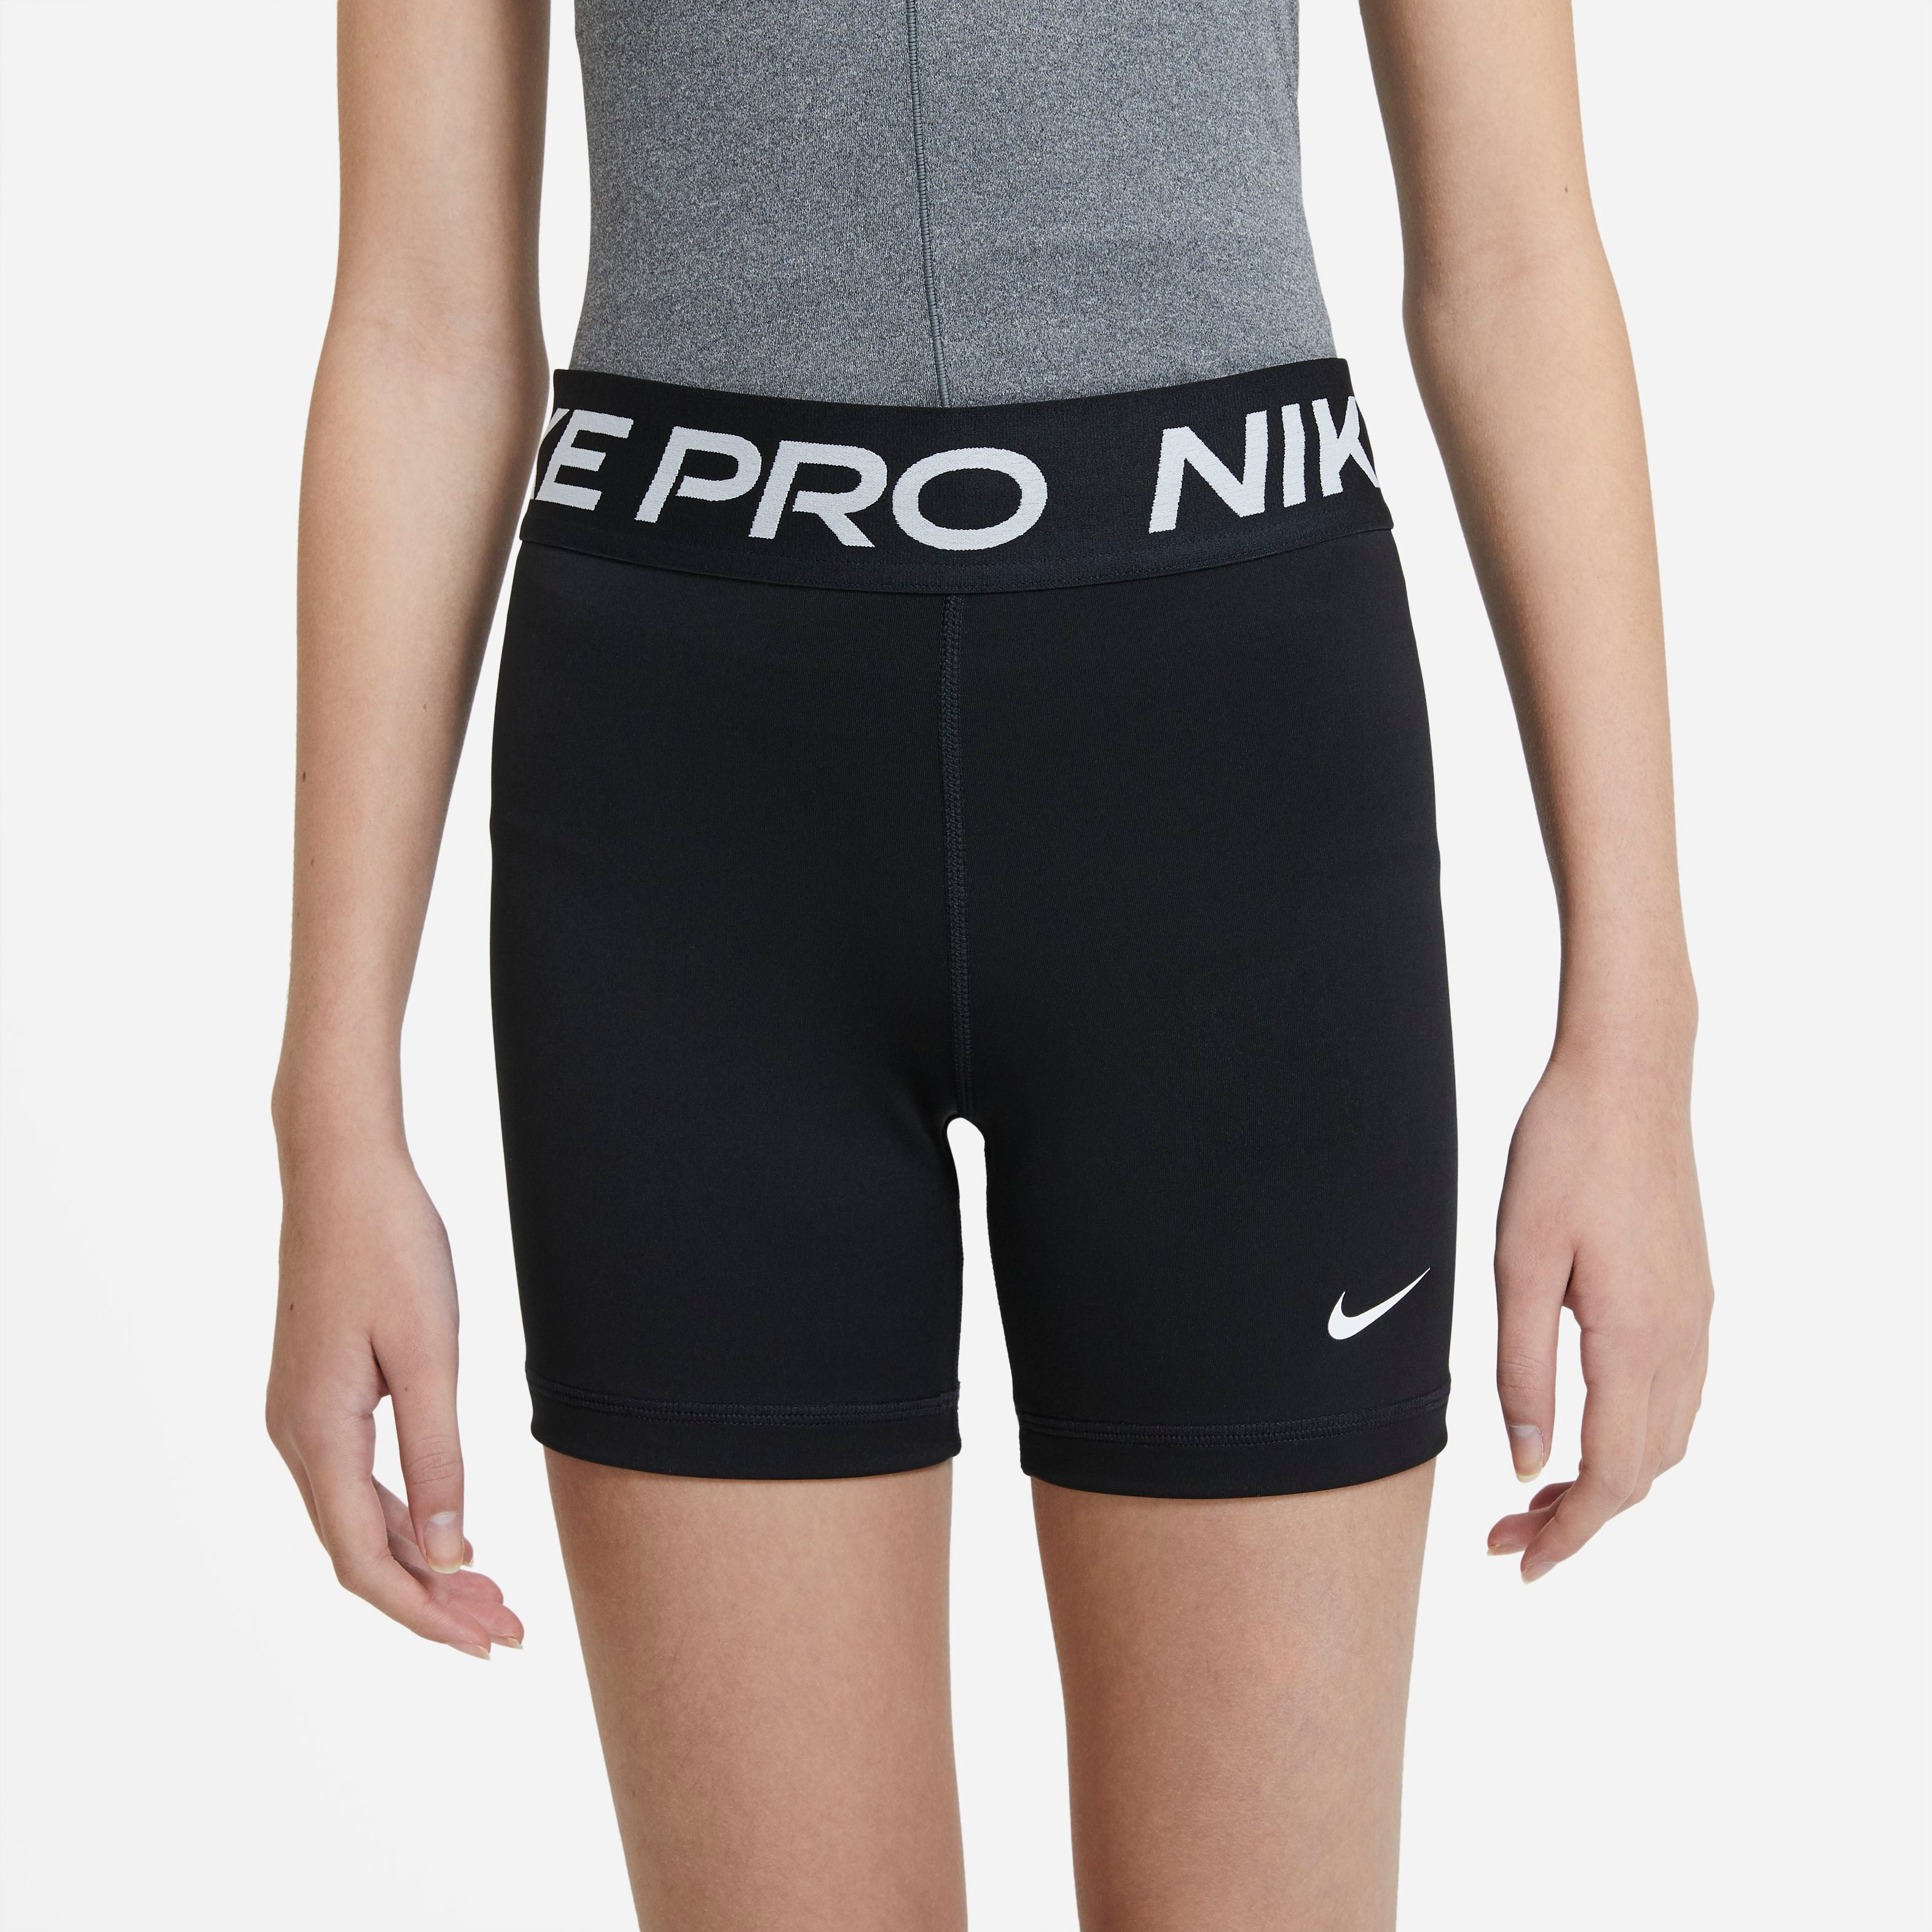 Buy Nike Pro Sports Bra - Girls - Black/White - Youth Large at